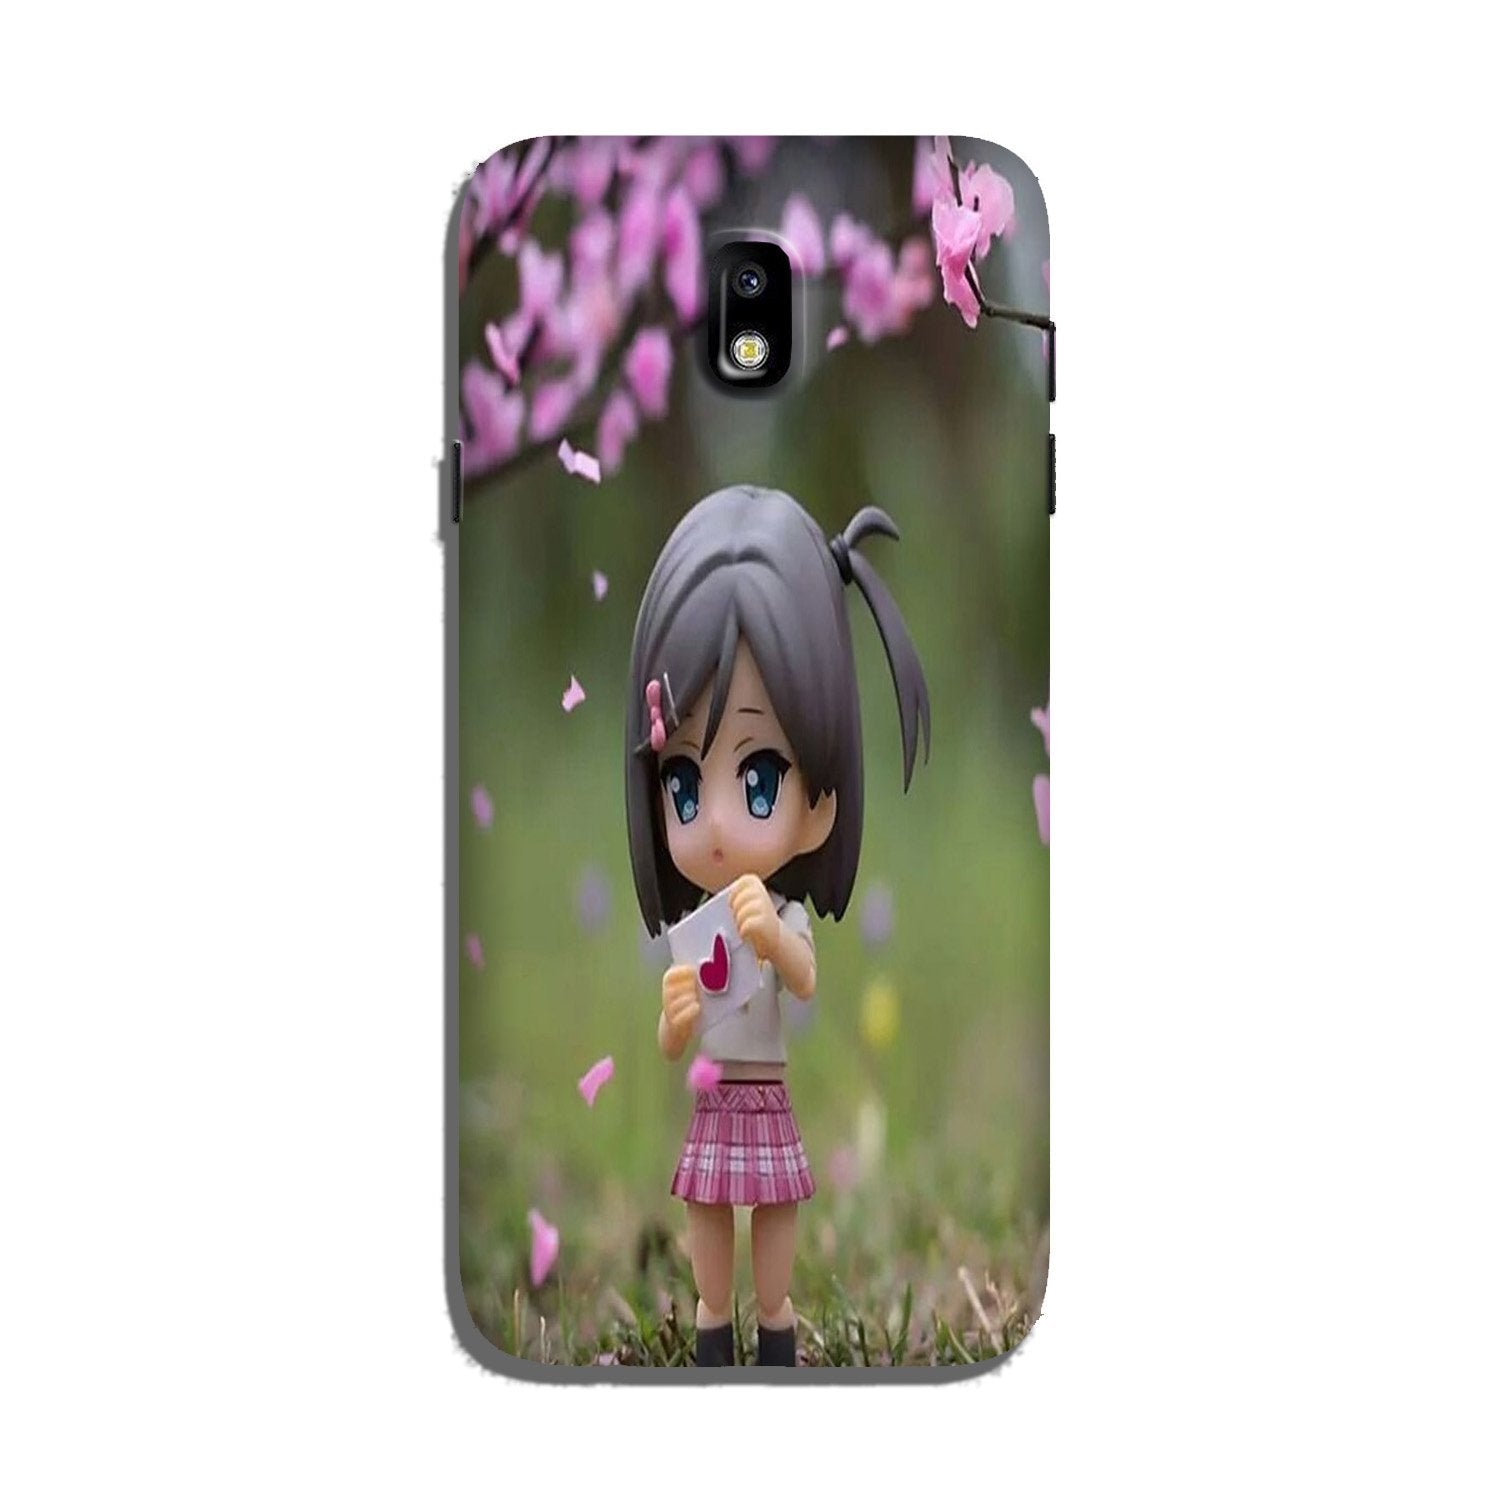 Cute Girl Case for Galaxy J7 Pro